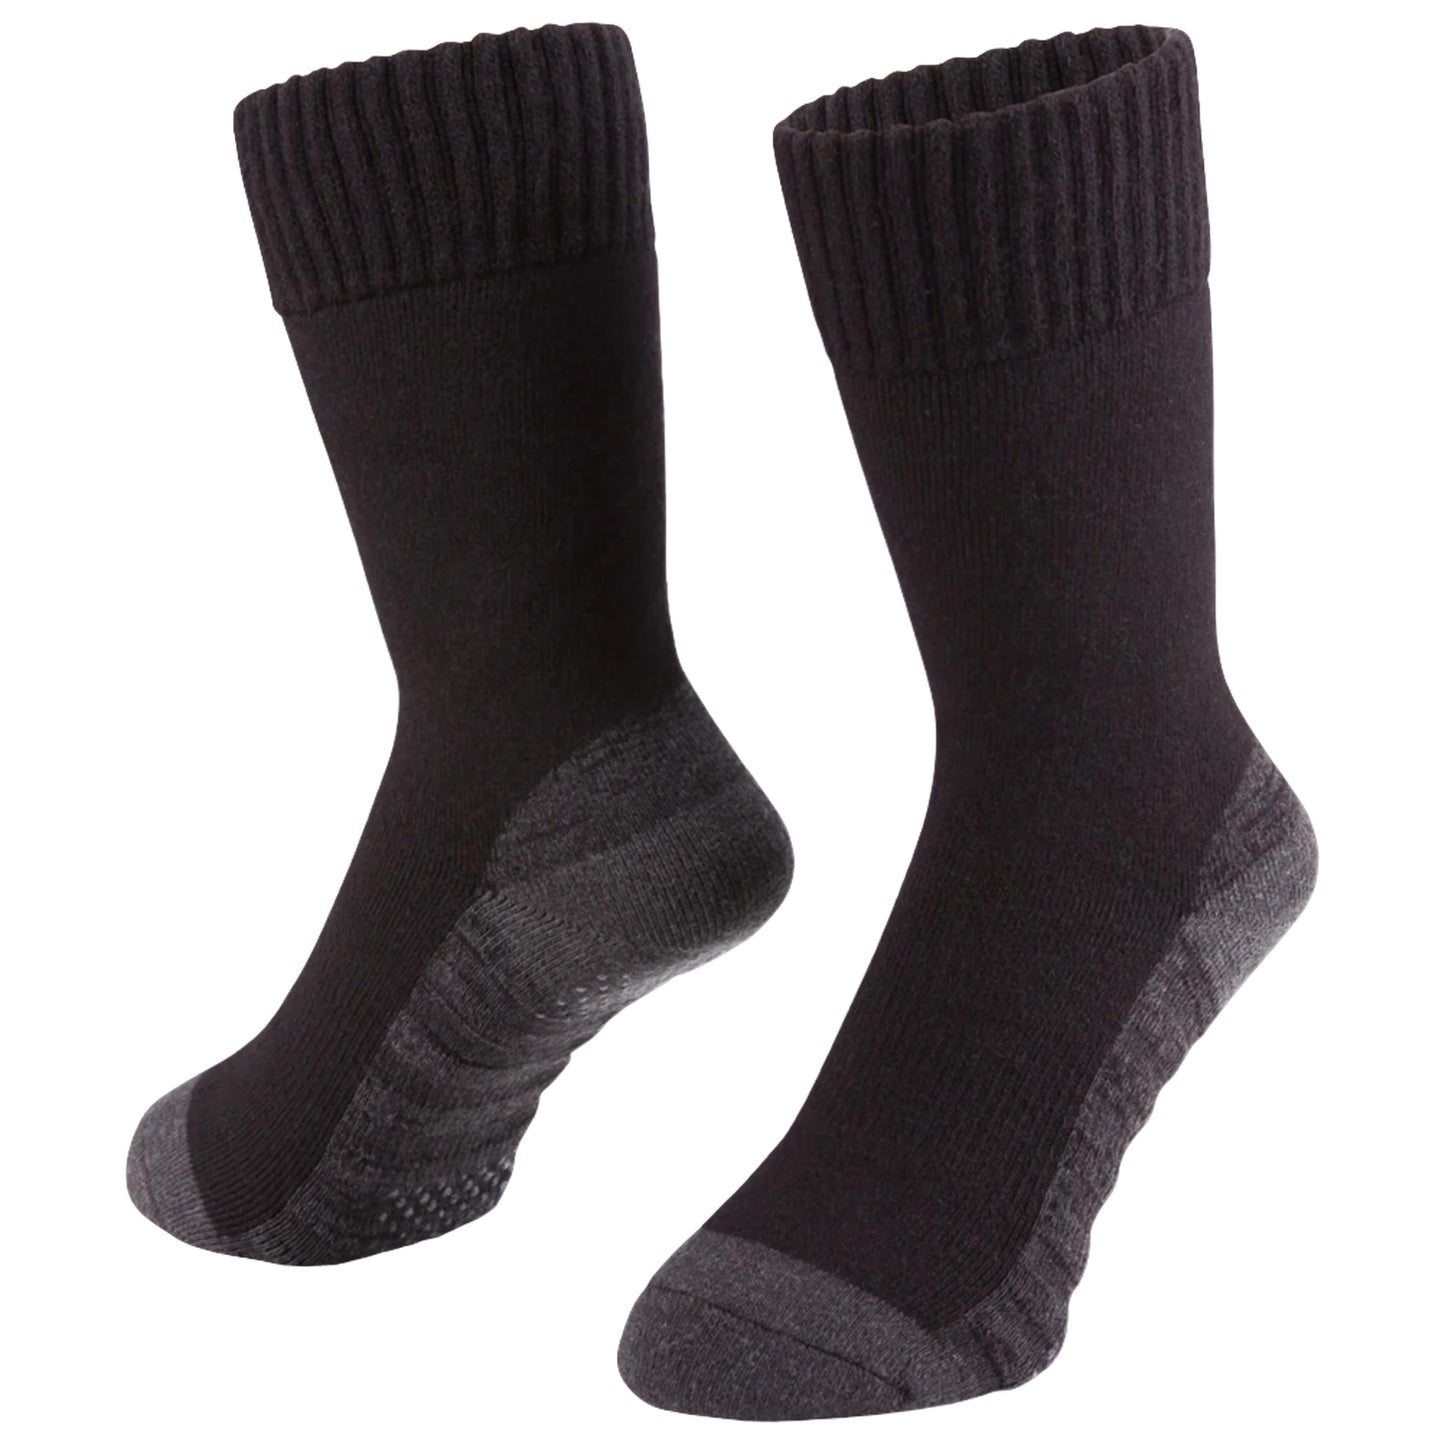 Zerofit Heatrub ULTIMATE Socks